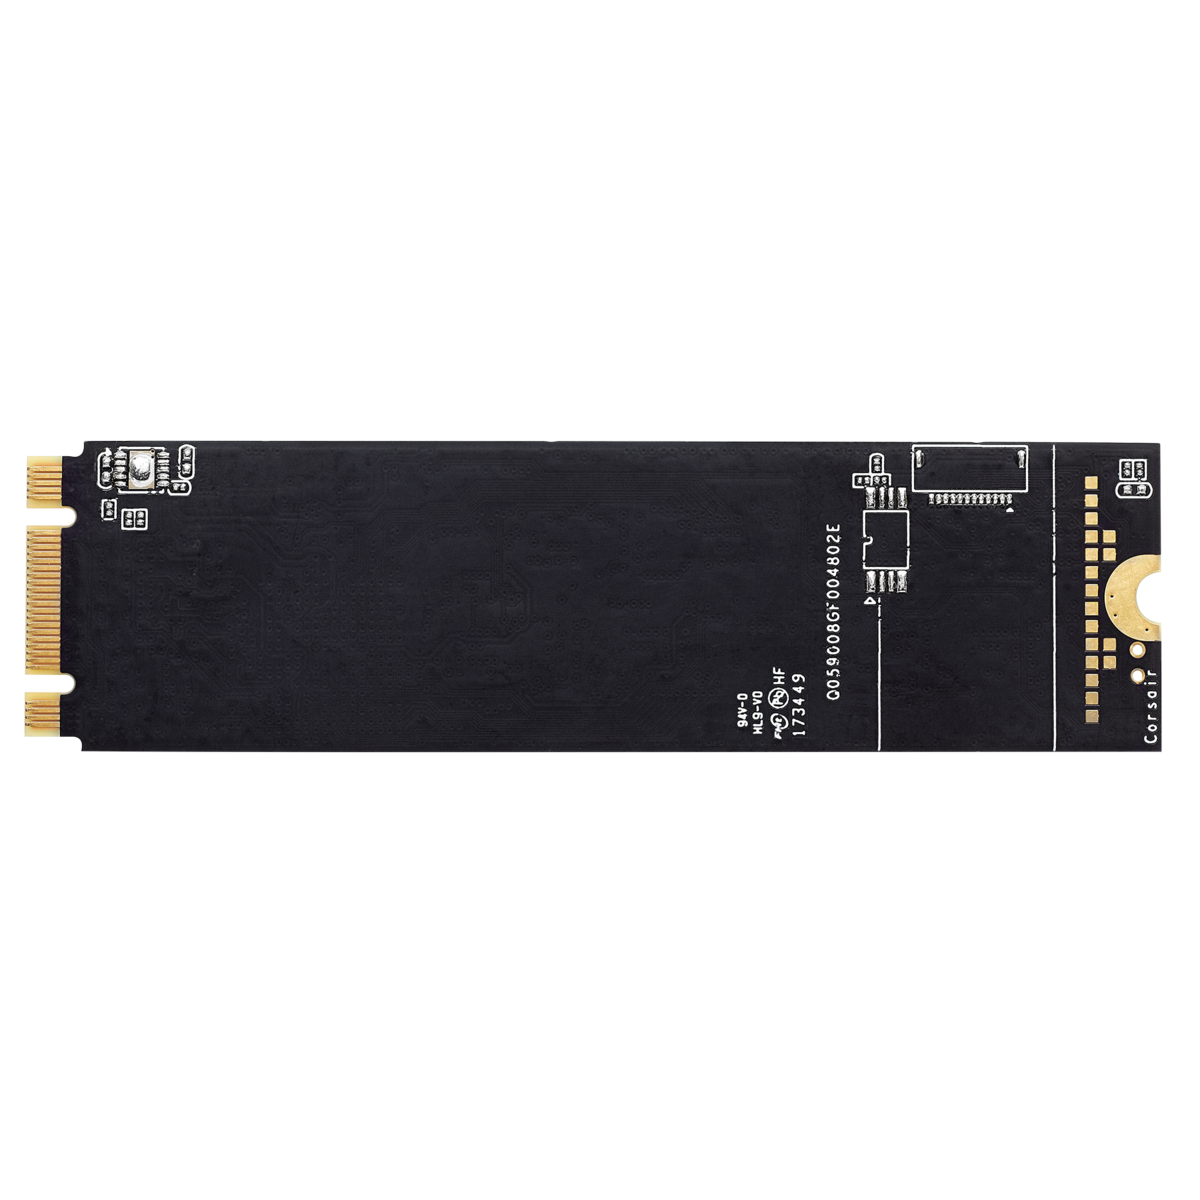 Corsair Force MP300 CSSD-F120GBMP300/RF2 M.2 NVMe SSD 120GB /